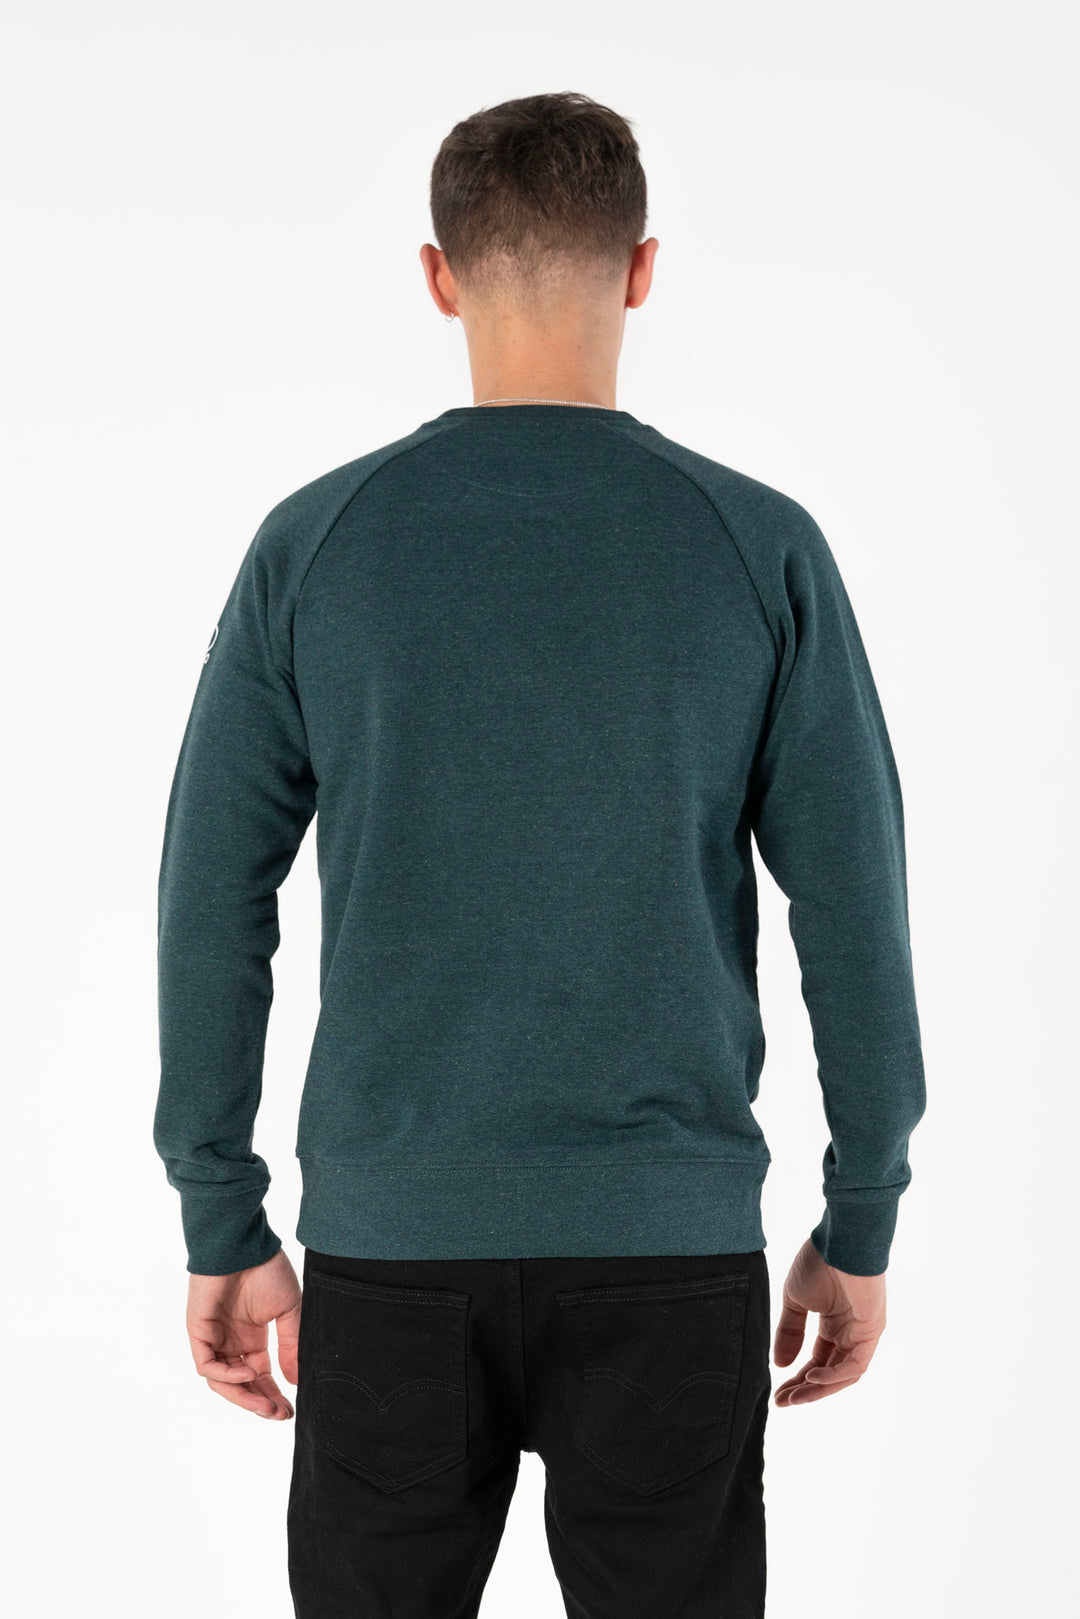 Snow Green Sweatshirt-Sweatshirts-PIRKANI